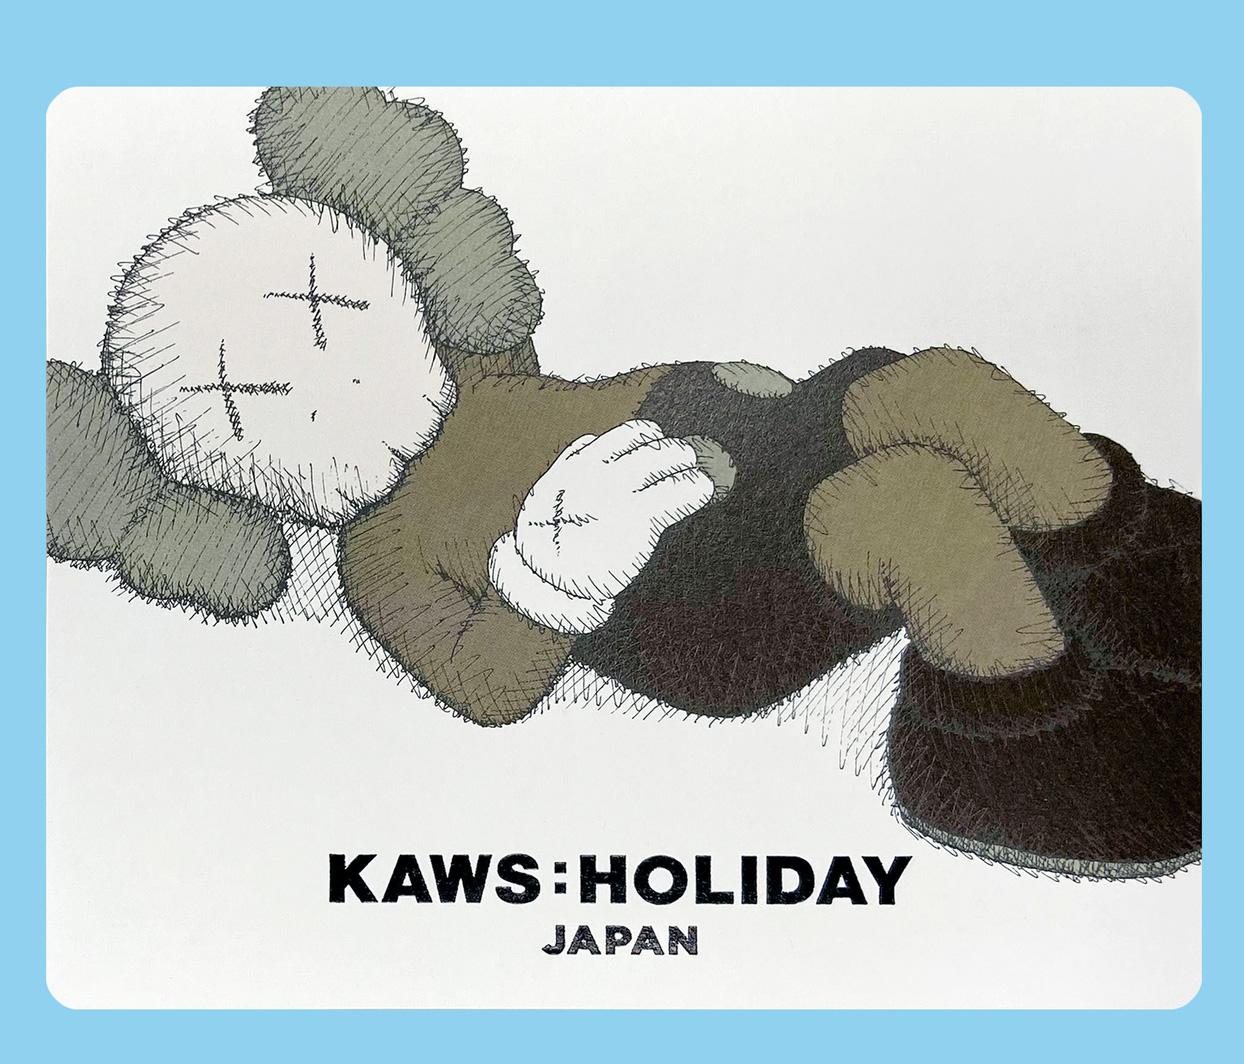 KAWS Holiday Japan plush (KAWS holiday mount fuji)  1